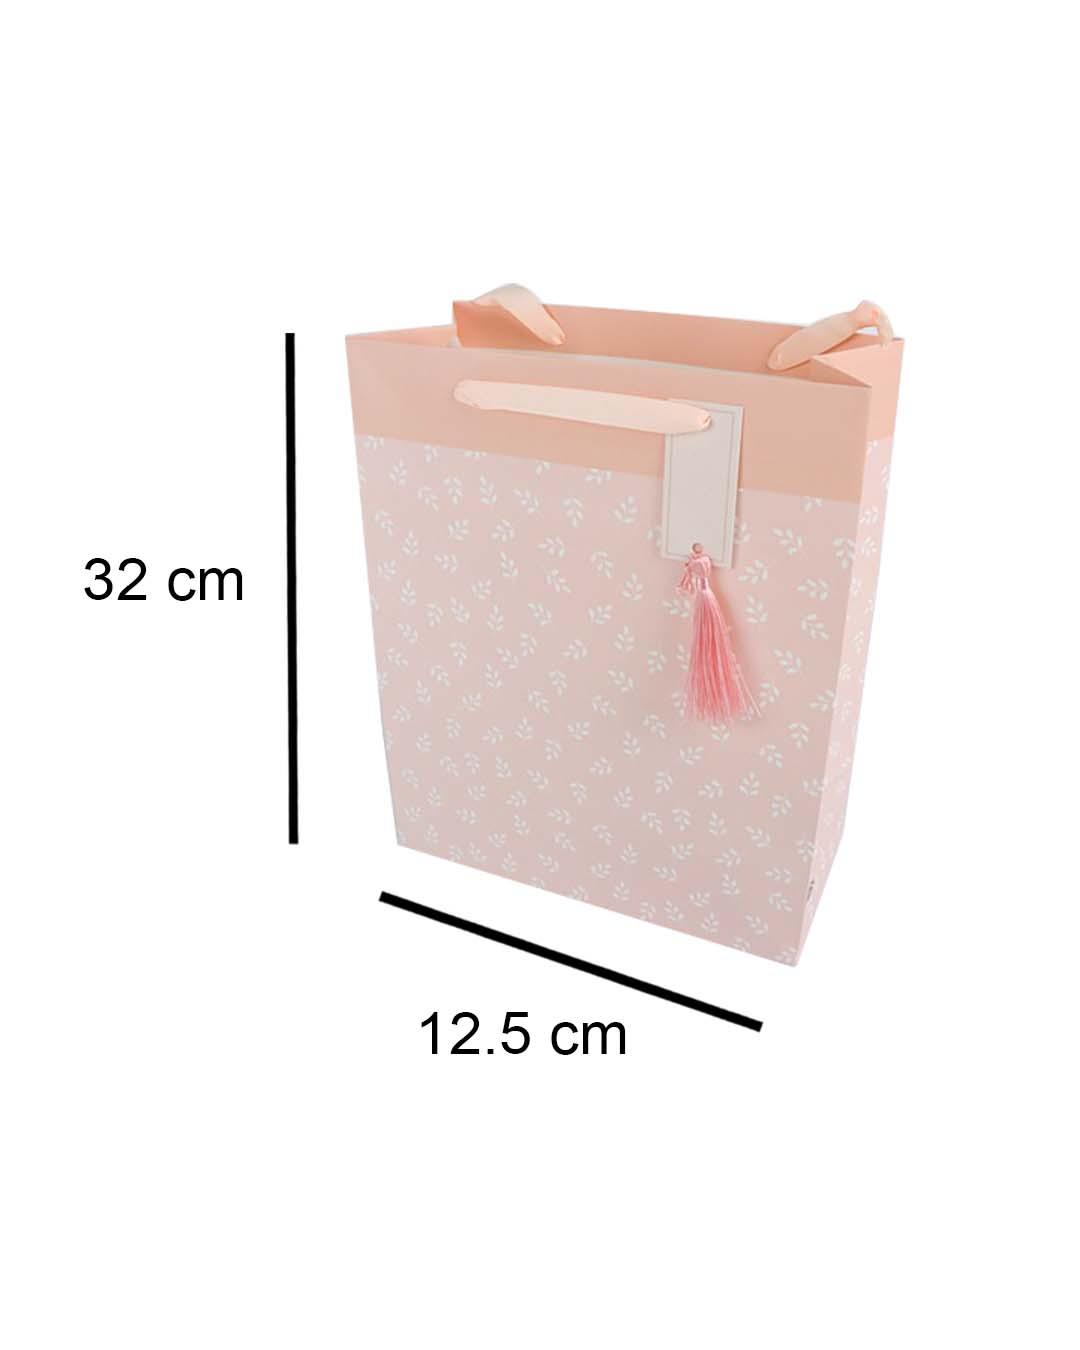 Gift Bag with Tassel, Large, Paper Bag, Peach, Paper, Set of 3 - MARKET 99